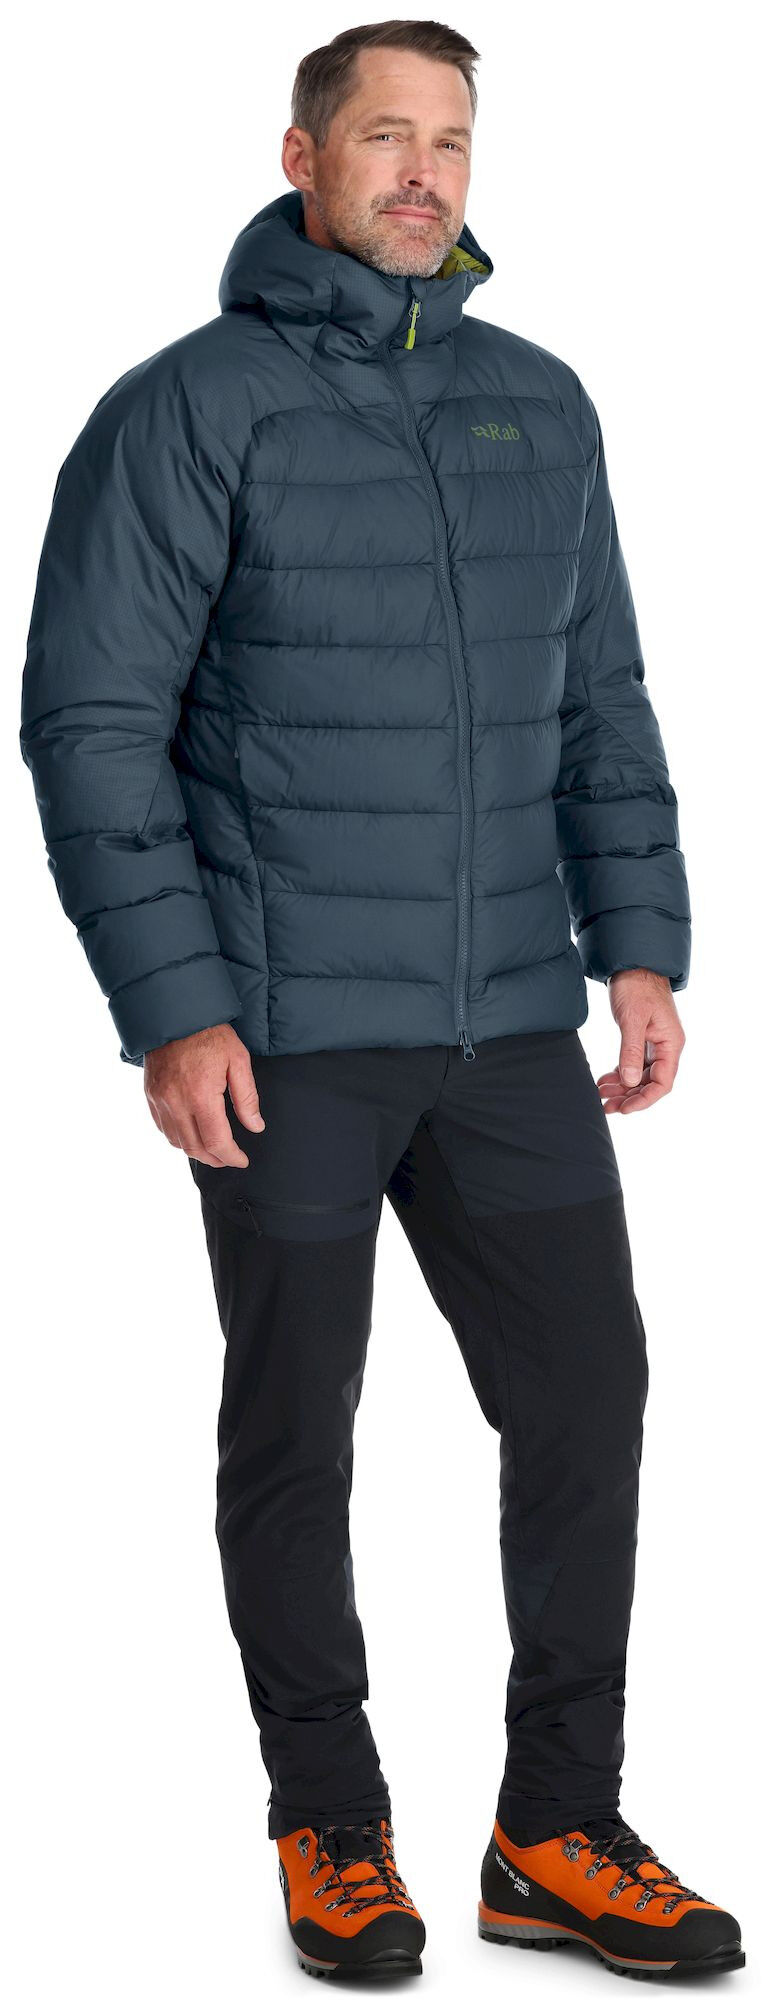 Rab Infinity Alpine Jacket - Giacca in piumino - Uomo